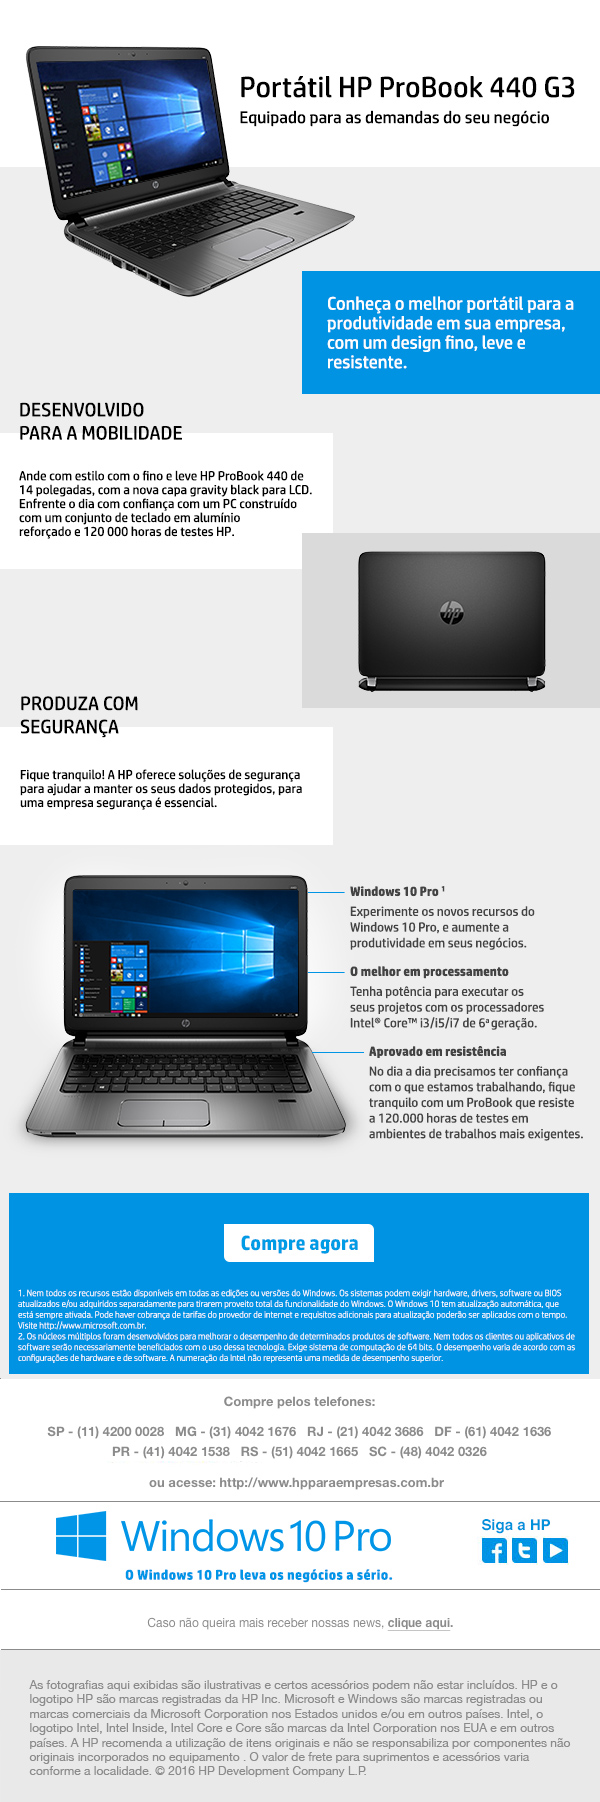 Portátil HP ProBook 440 G3